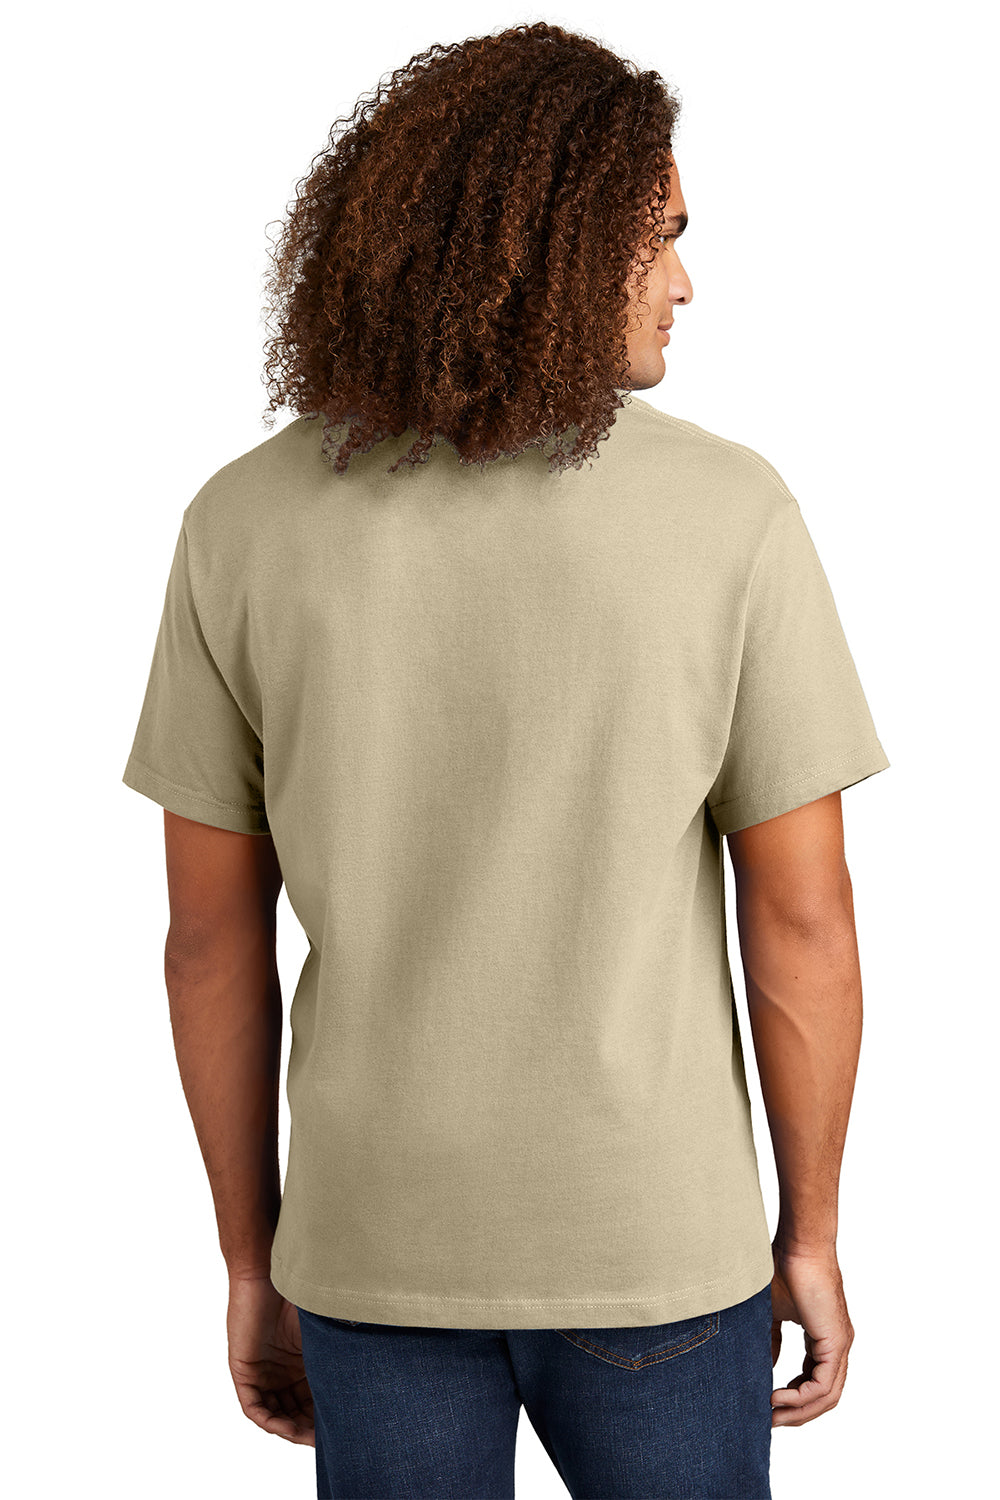 American Apparel 1301/AL1301 Mens Short Sleeve Crewneck T-Shirt Sand Model Back